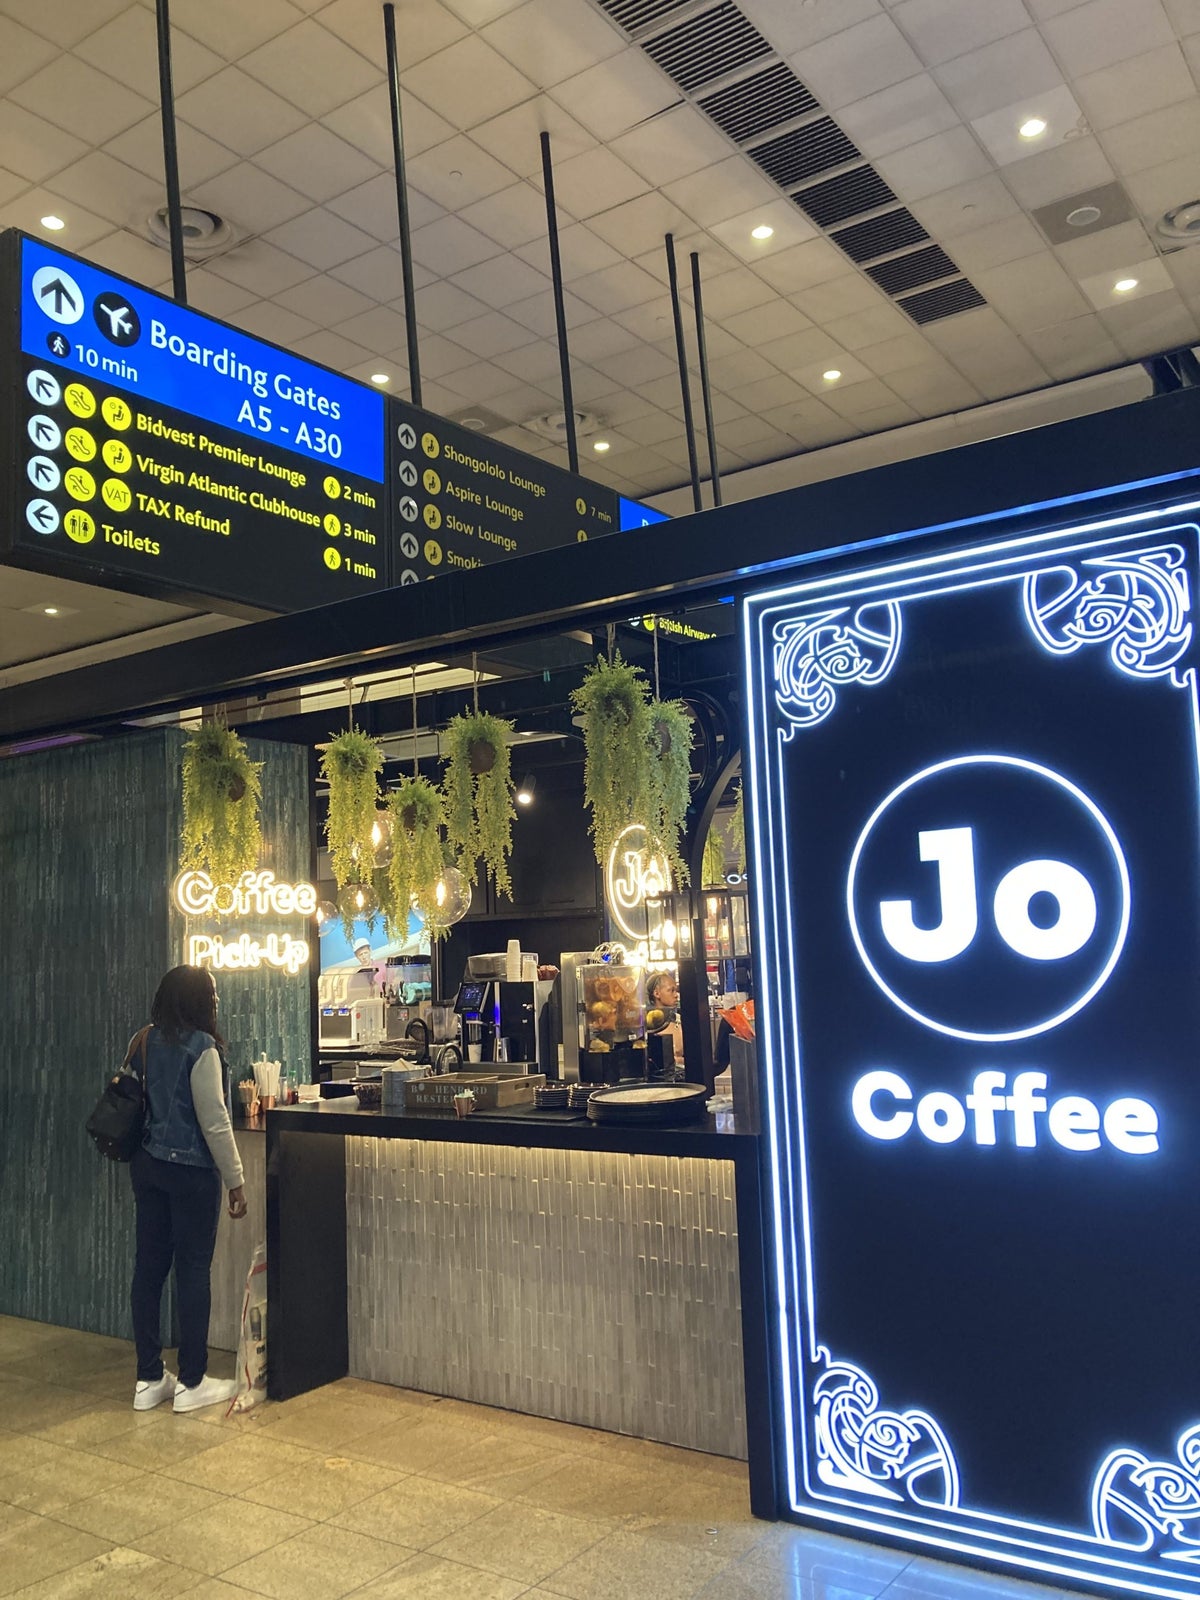 Bidvest Premier Lounge Jo Coffee signage